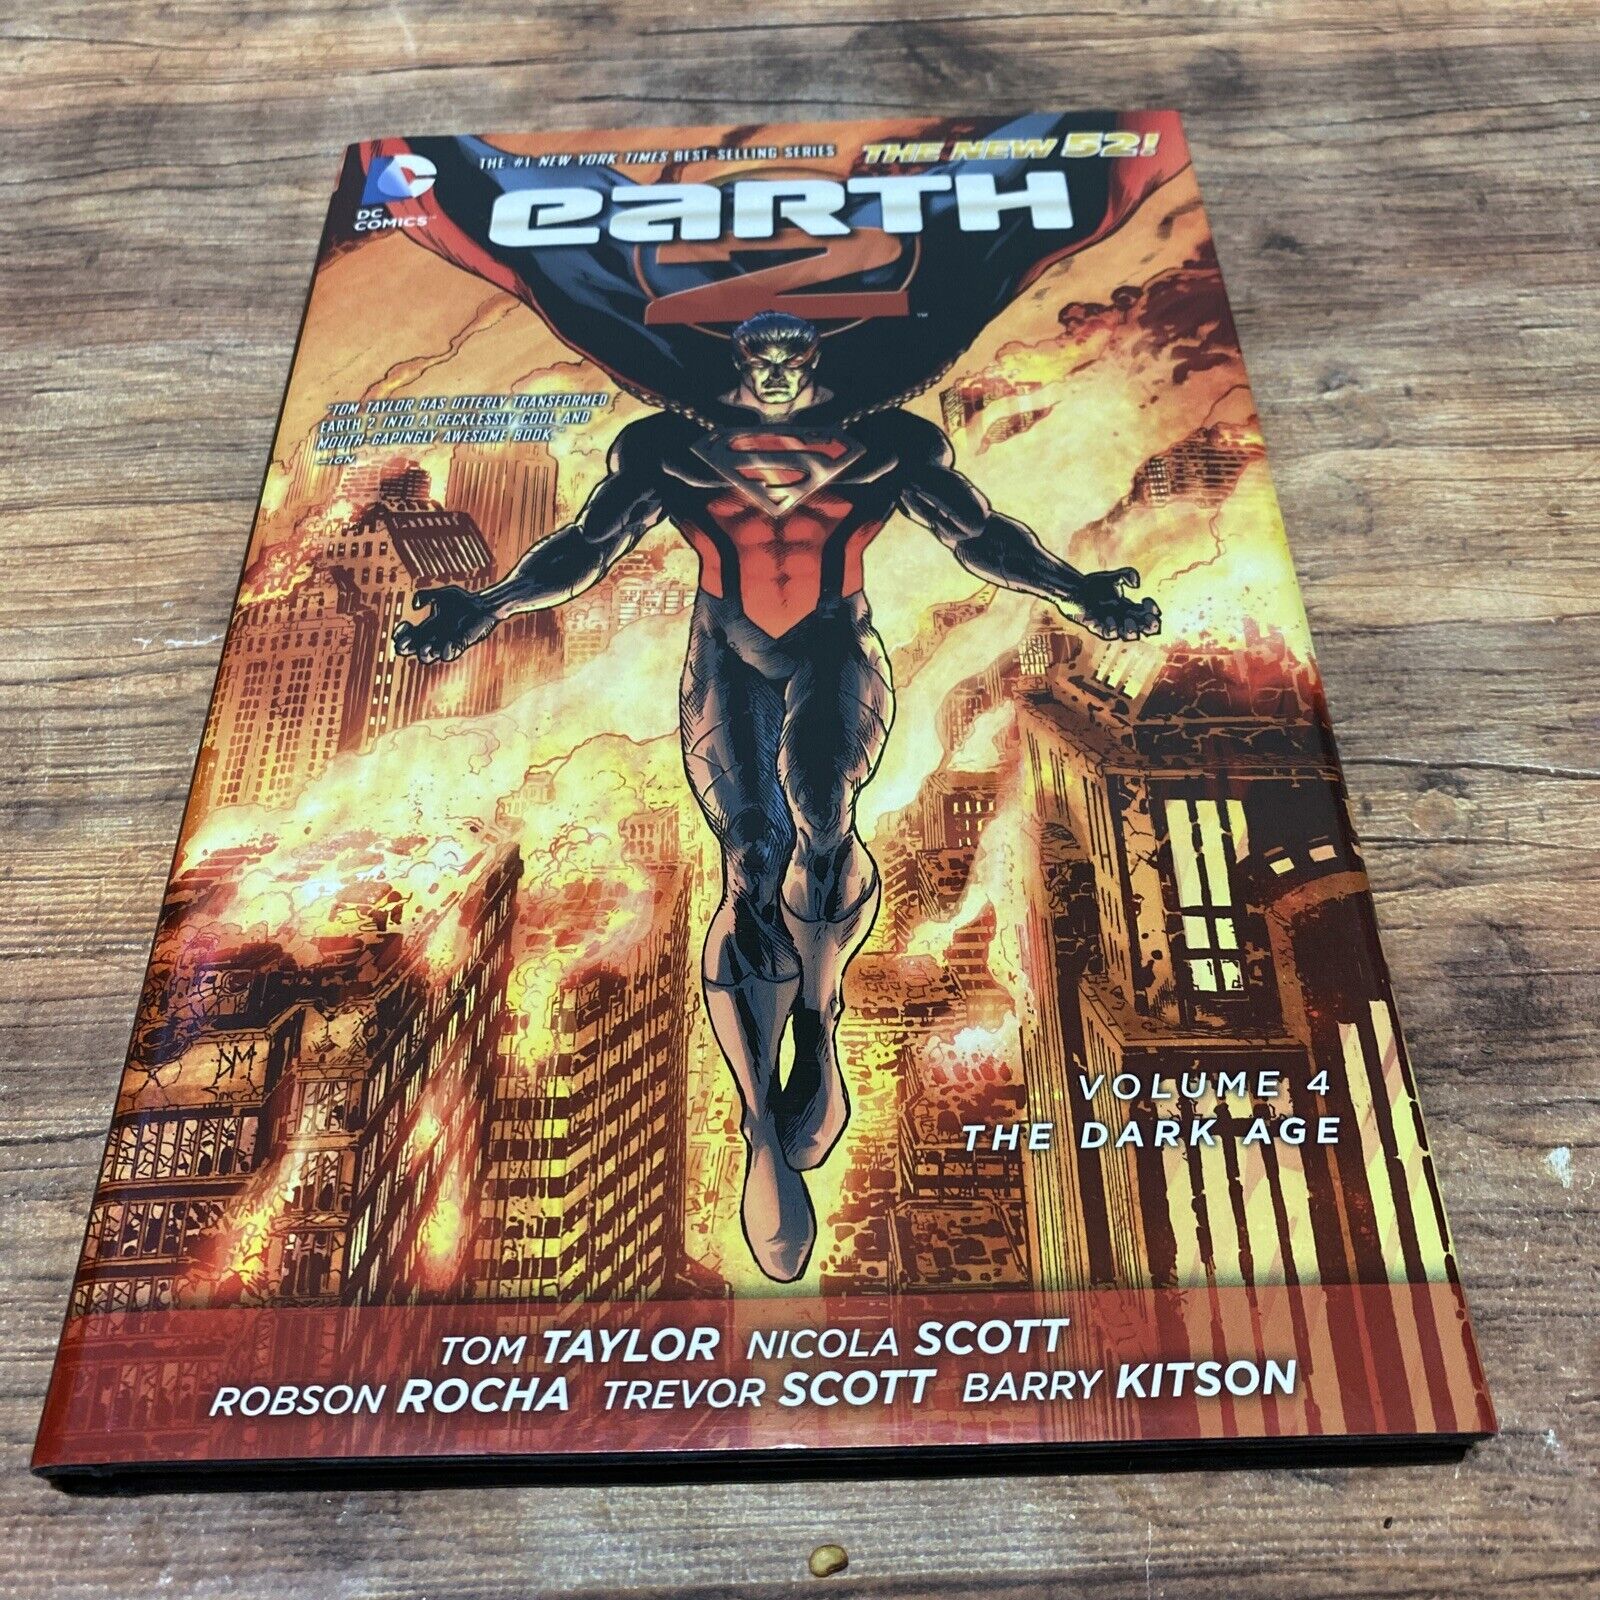 Earth 2 #4 (DC Comics, December 2014)